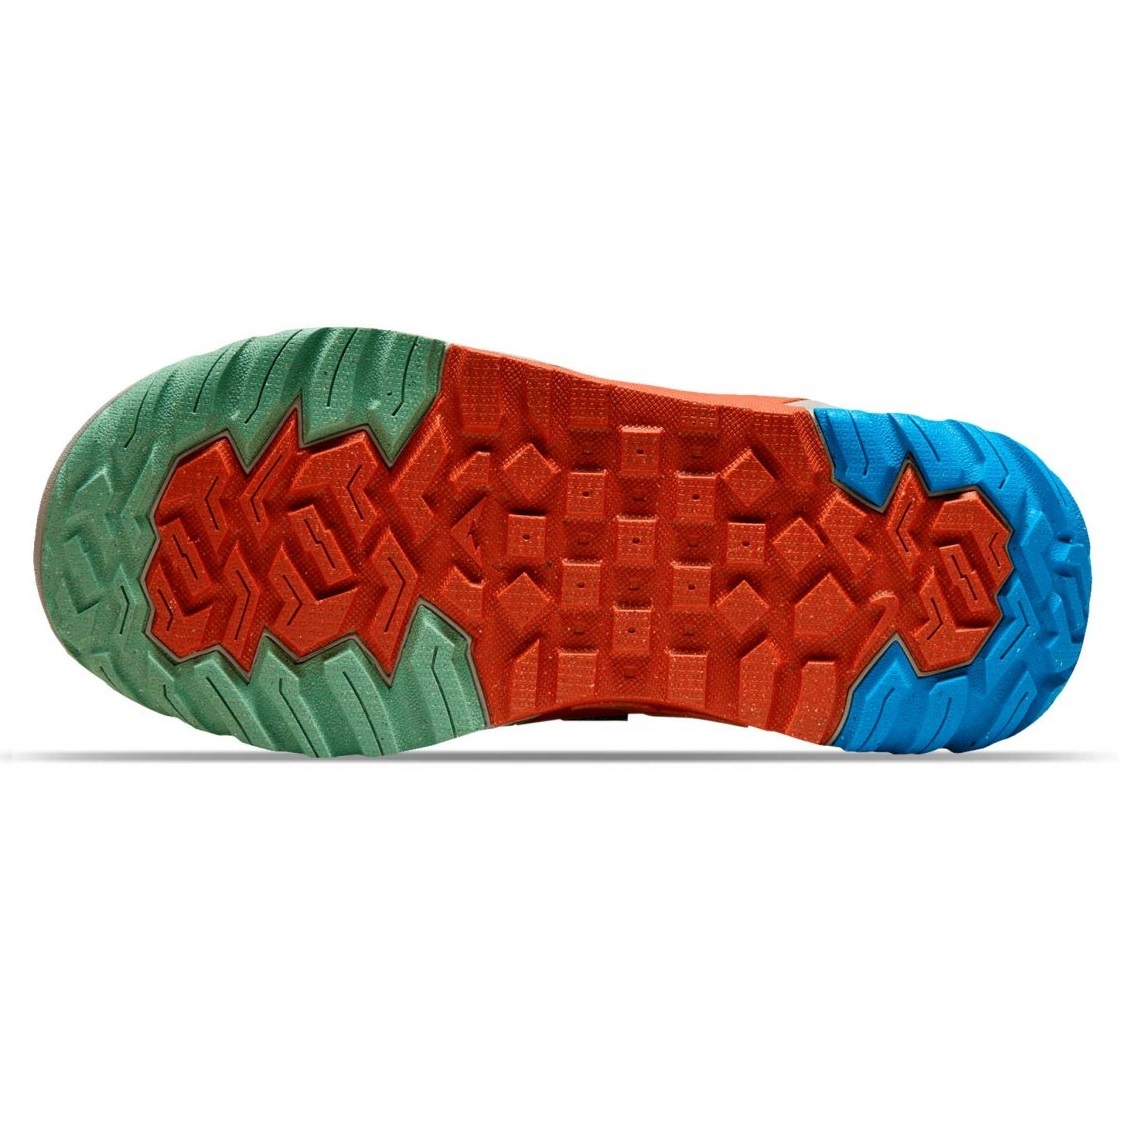 # Nike oni on ta сандалии черный / эмаль зеленый /kobru Stone новый товар 26.0cm US8 NIKE ONEONTA SANDAL уличный DJ6603-003